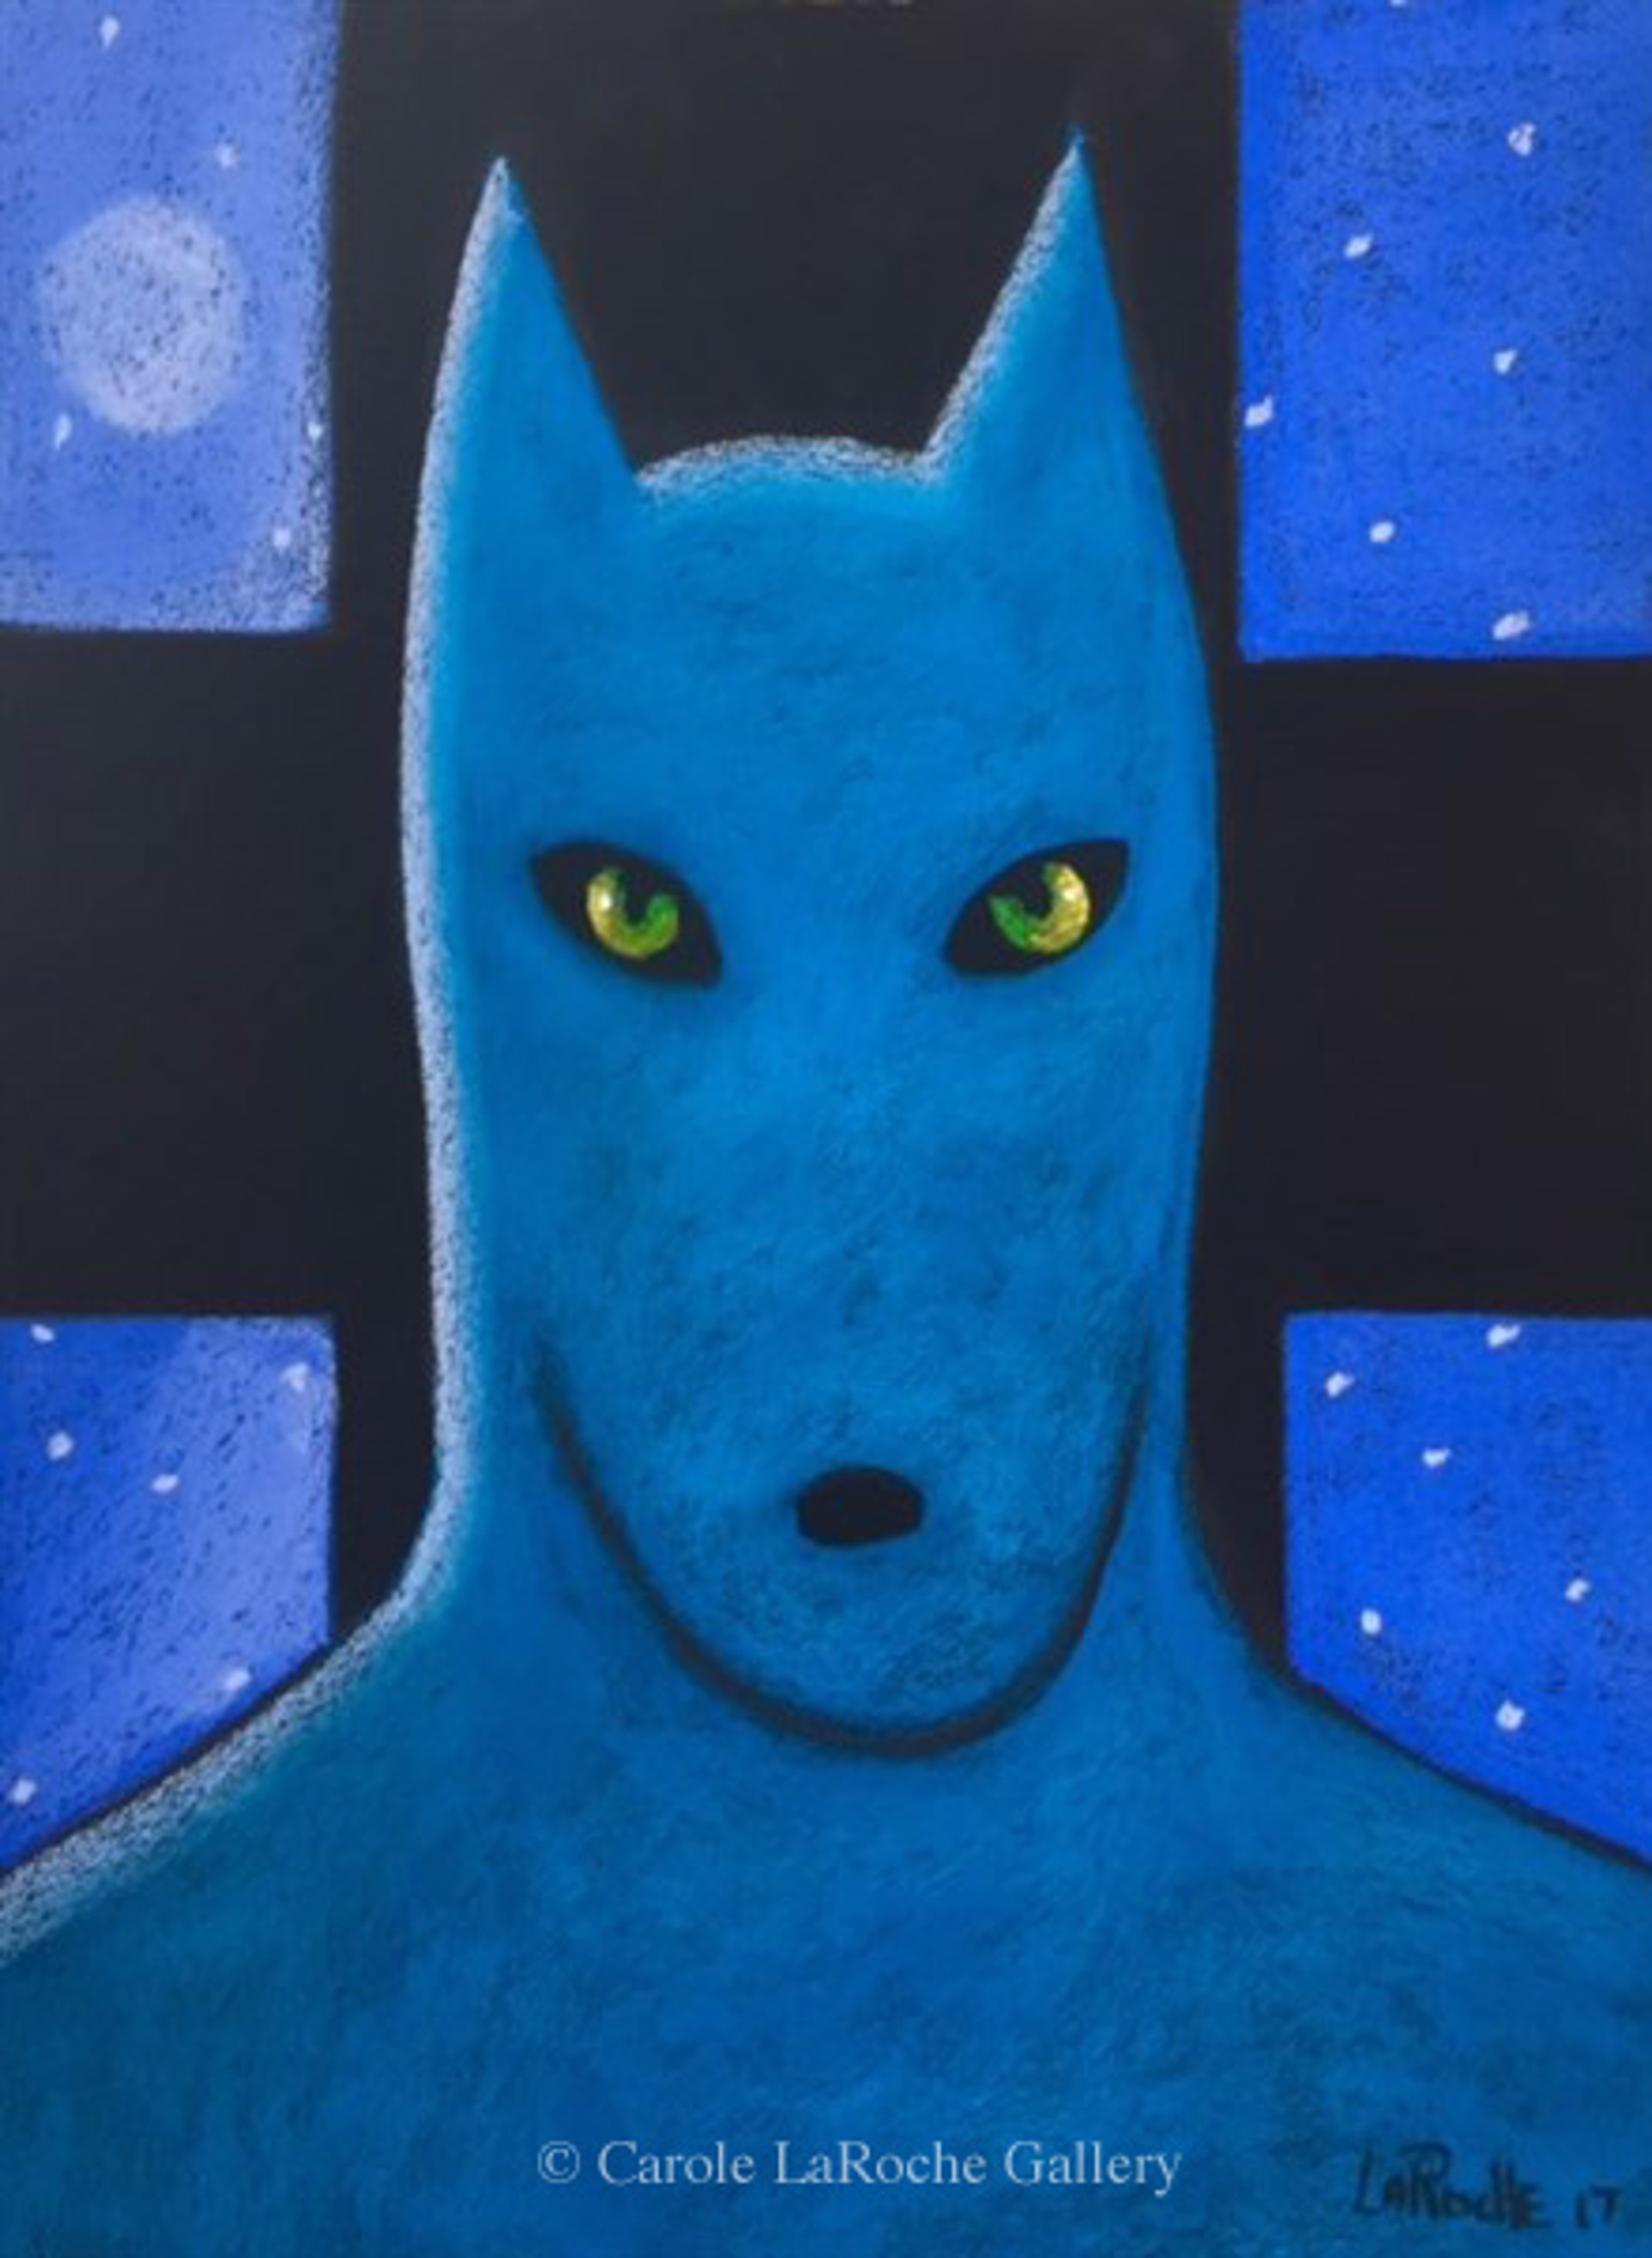 BLUE WARRIOR WITH STARS by Carole LaRoche